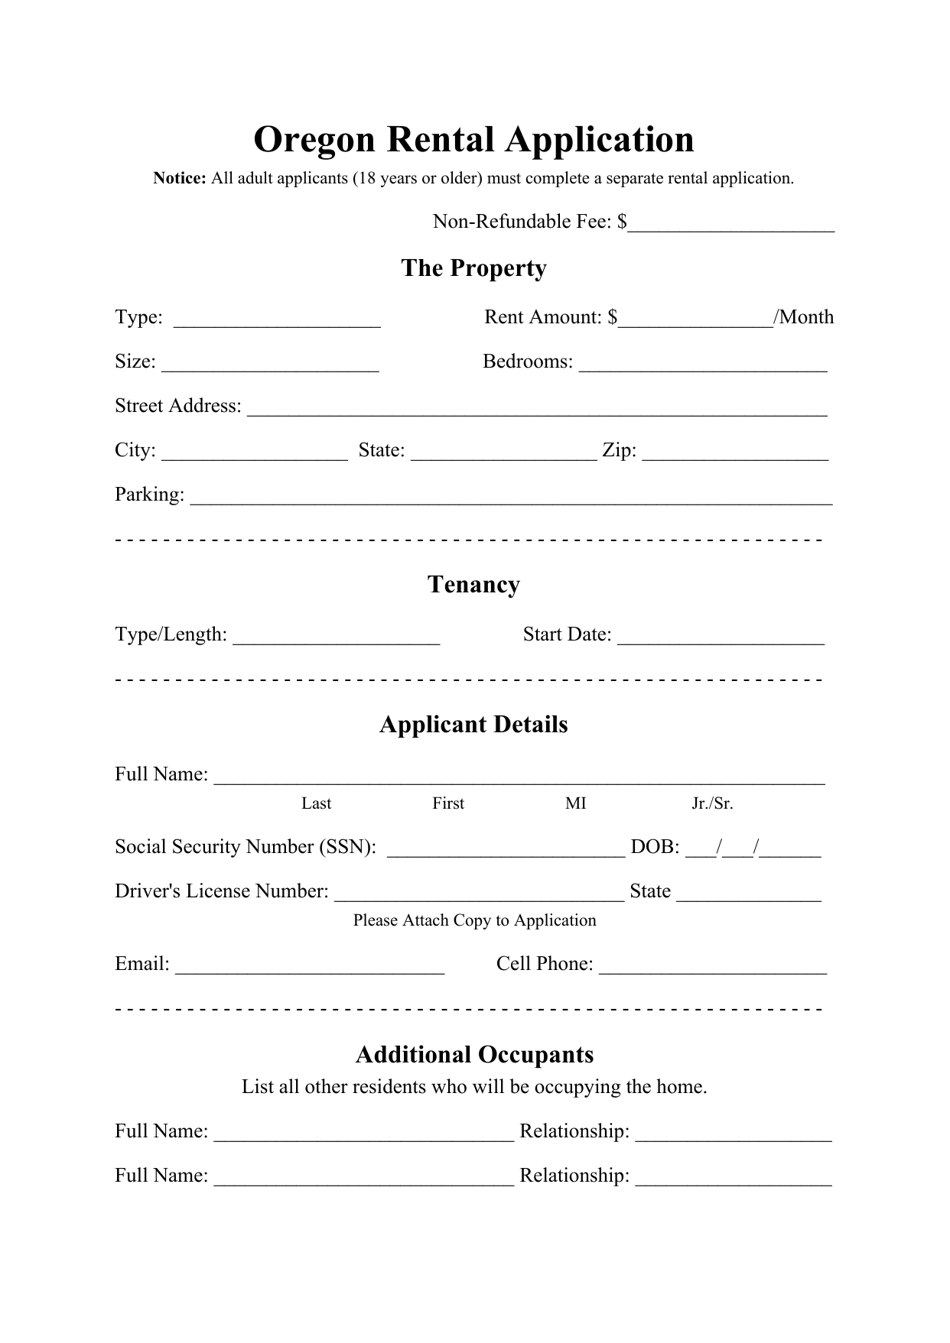 Rental Application Form - Oregon, Page 1